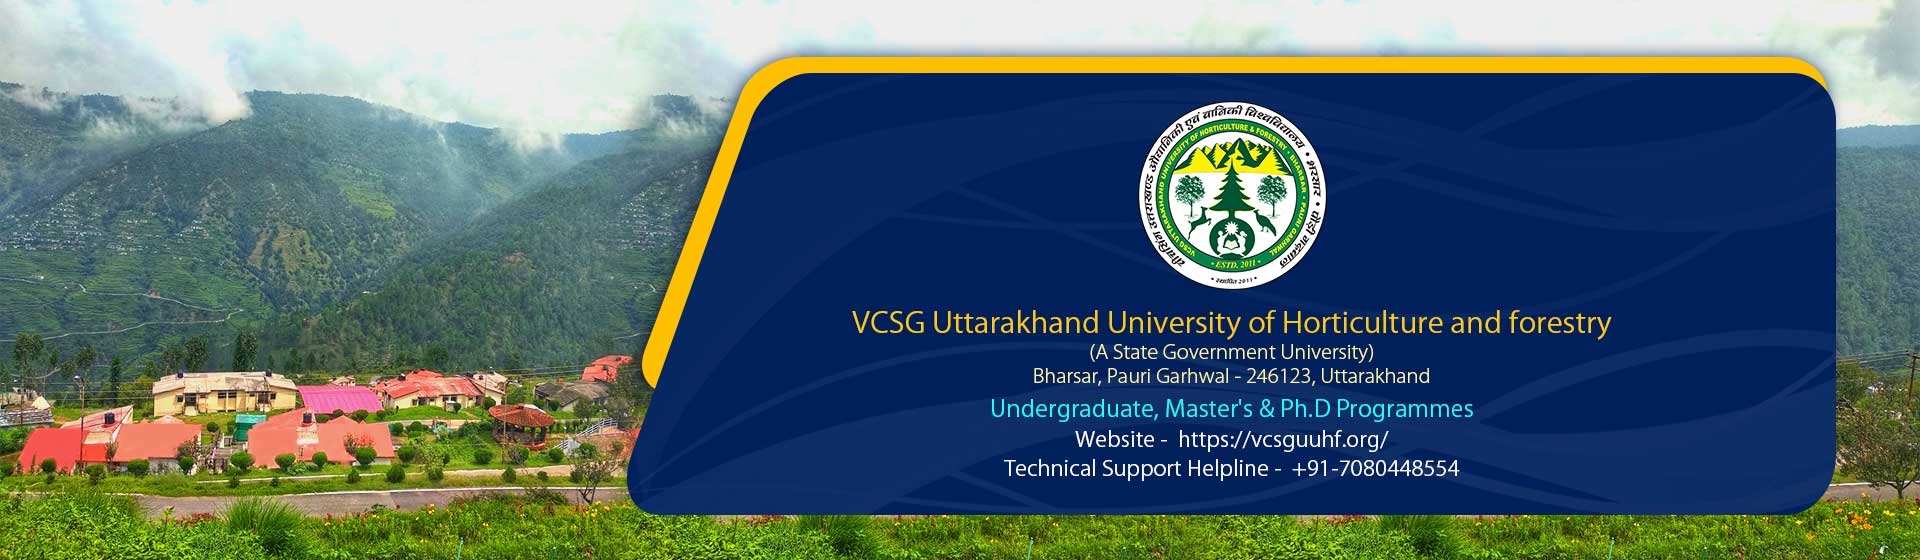 VCSG Uttarakhand University of Horticulture and forestry